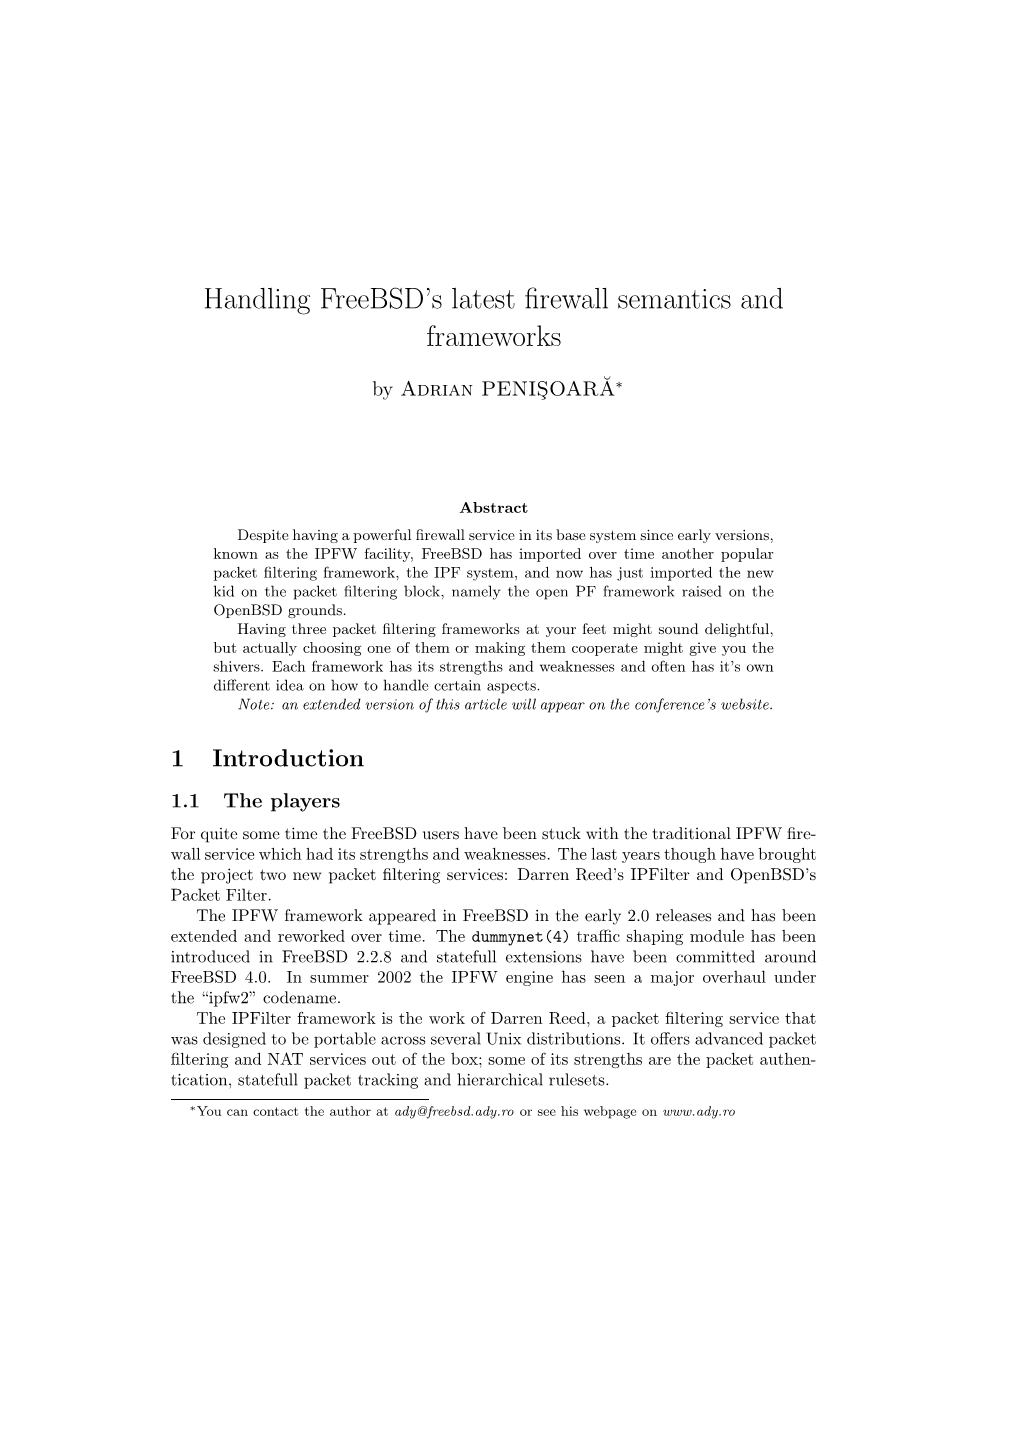 Handling Freebsd's Latest Firewall Semantics and Frameworks